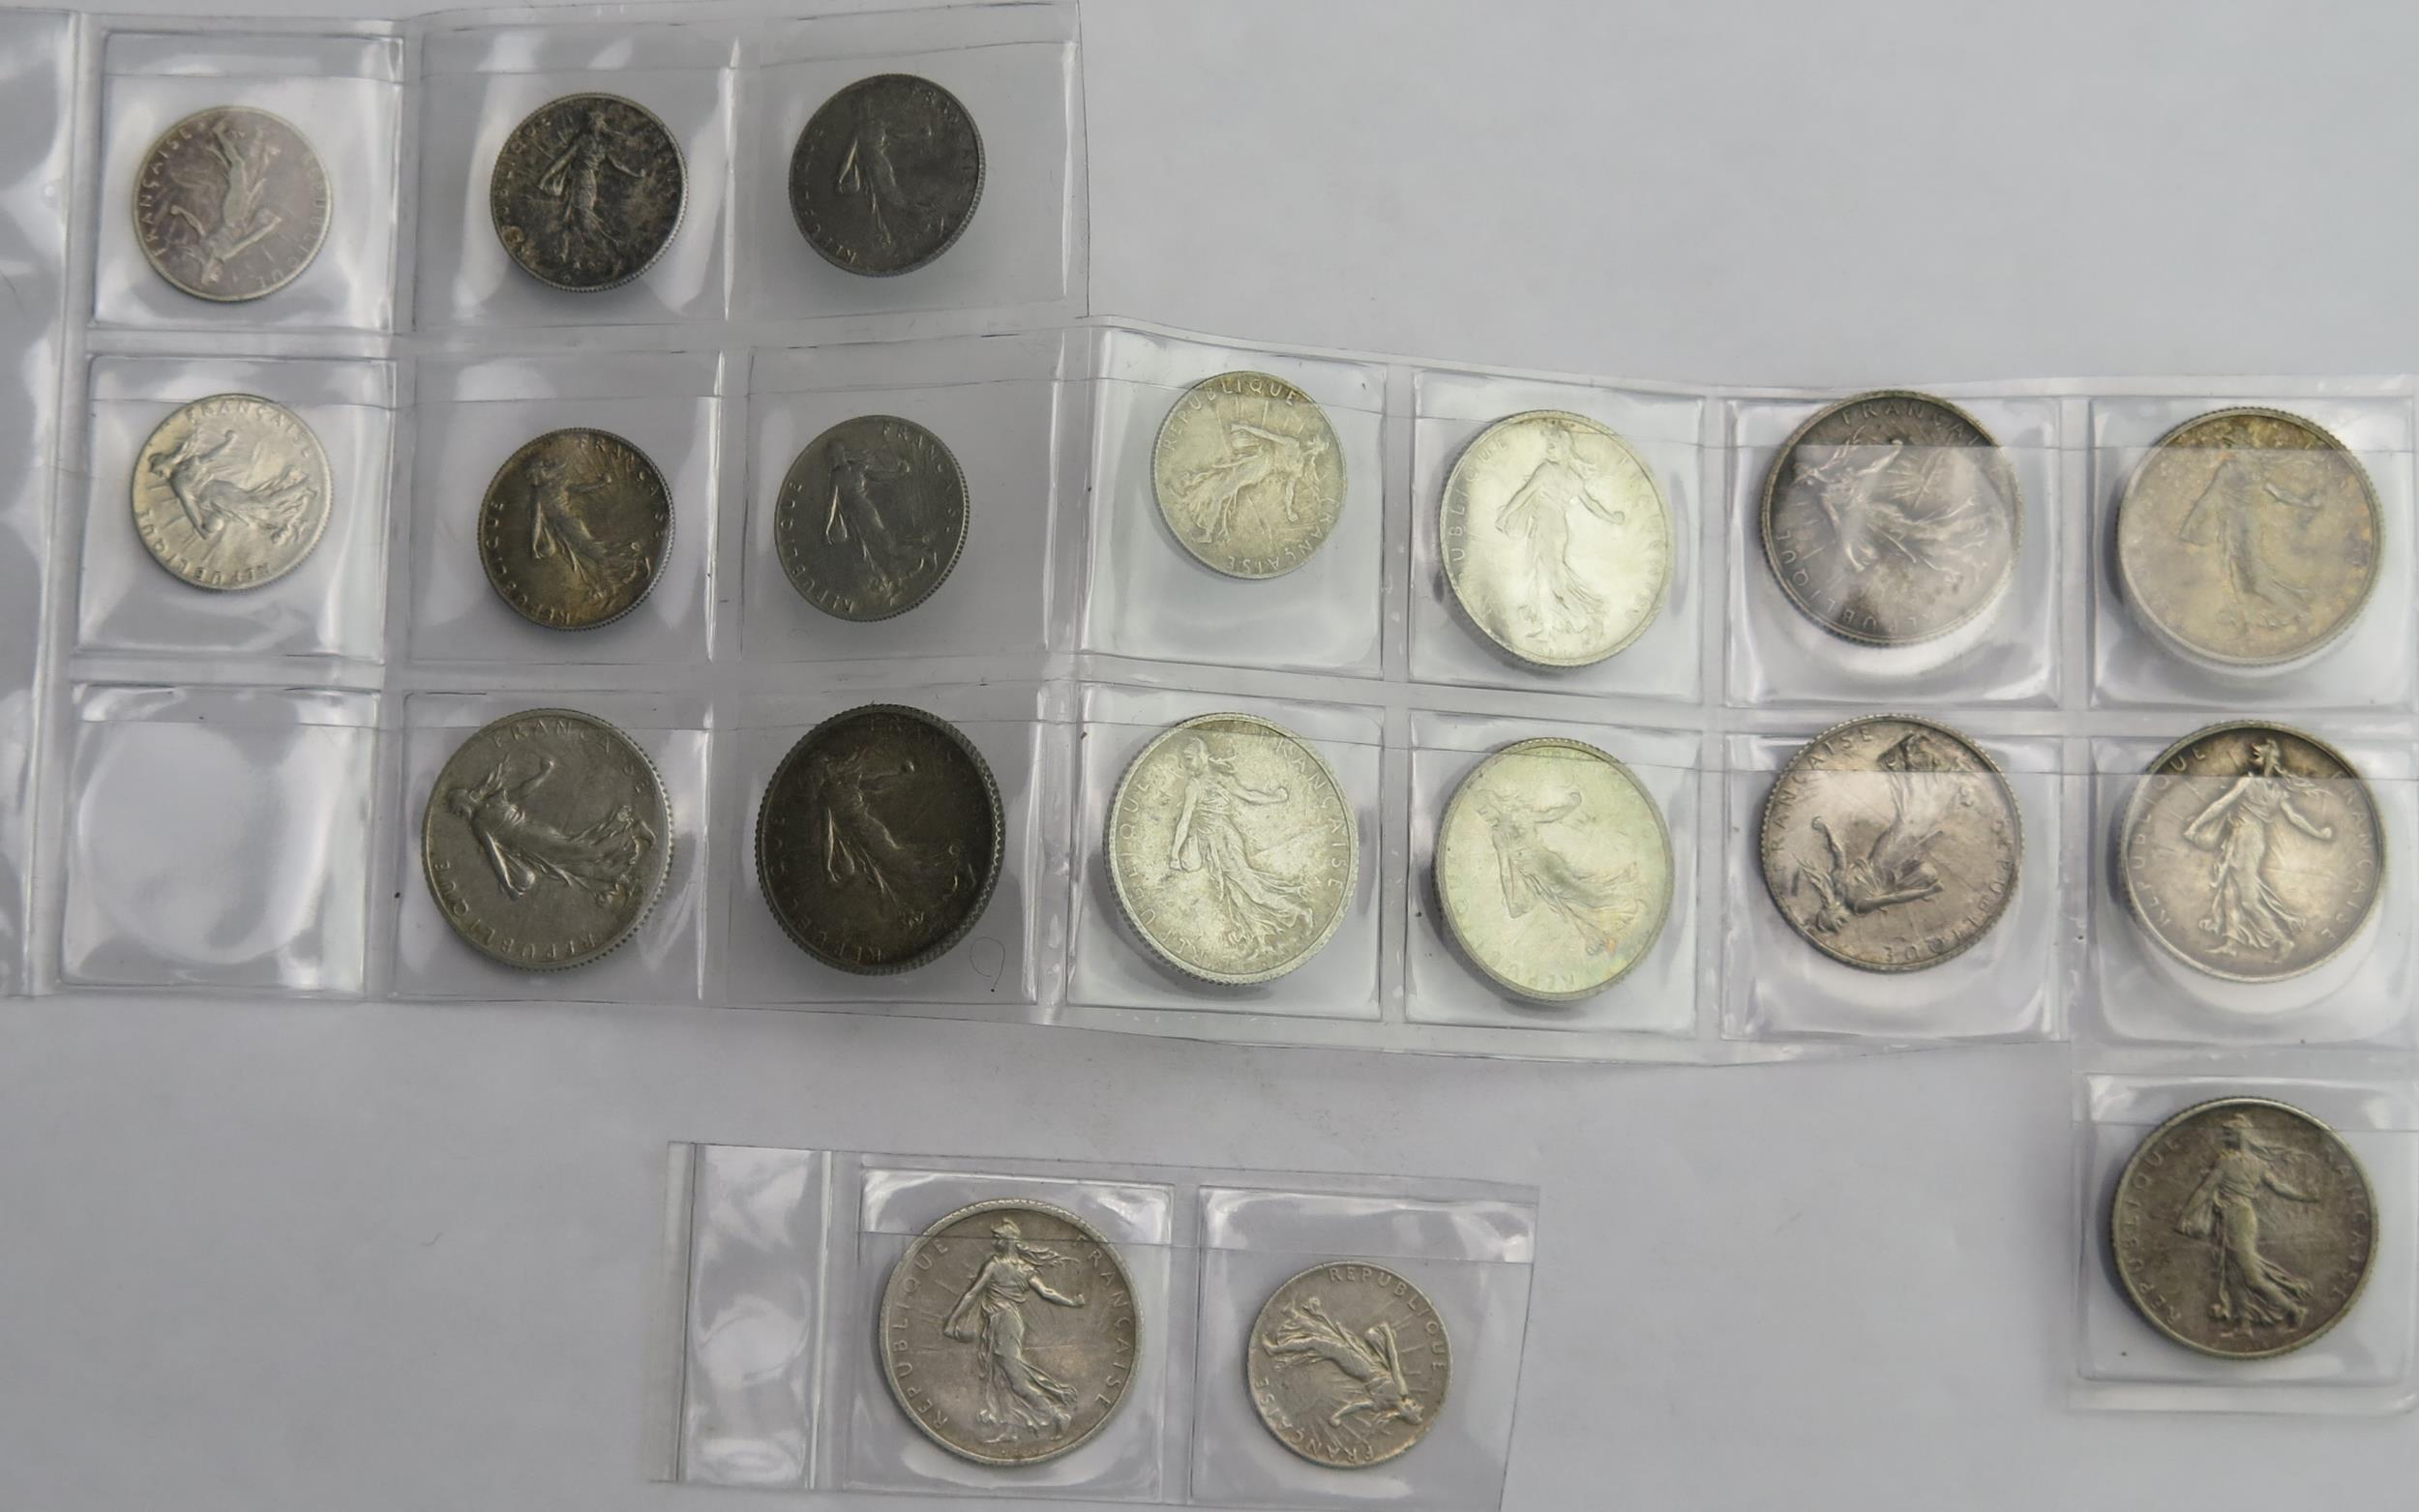 France - Francs 11 x silver Francs, 8 x 1/2 Francs - Image 2 of 2